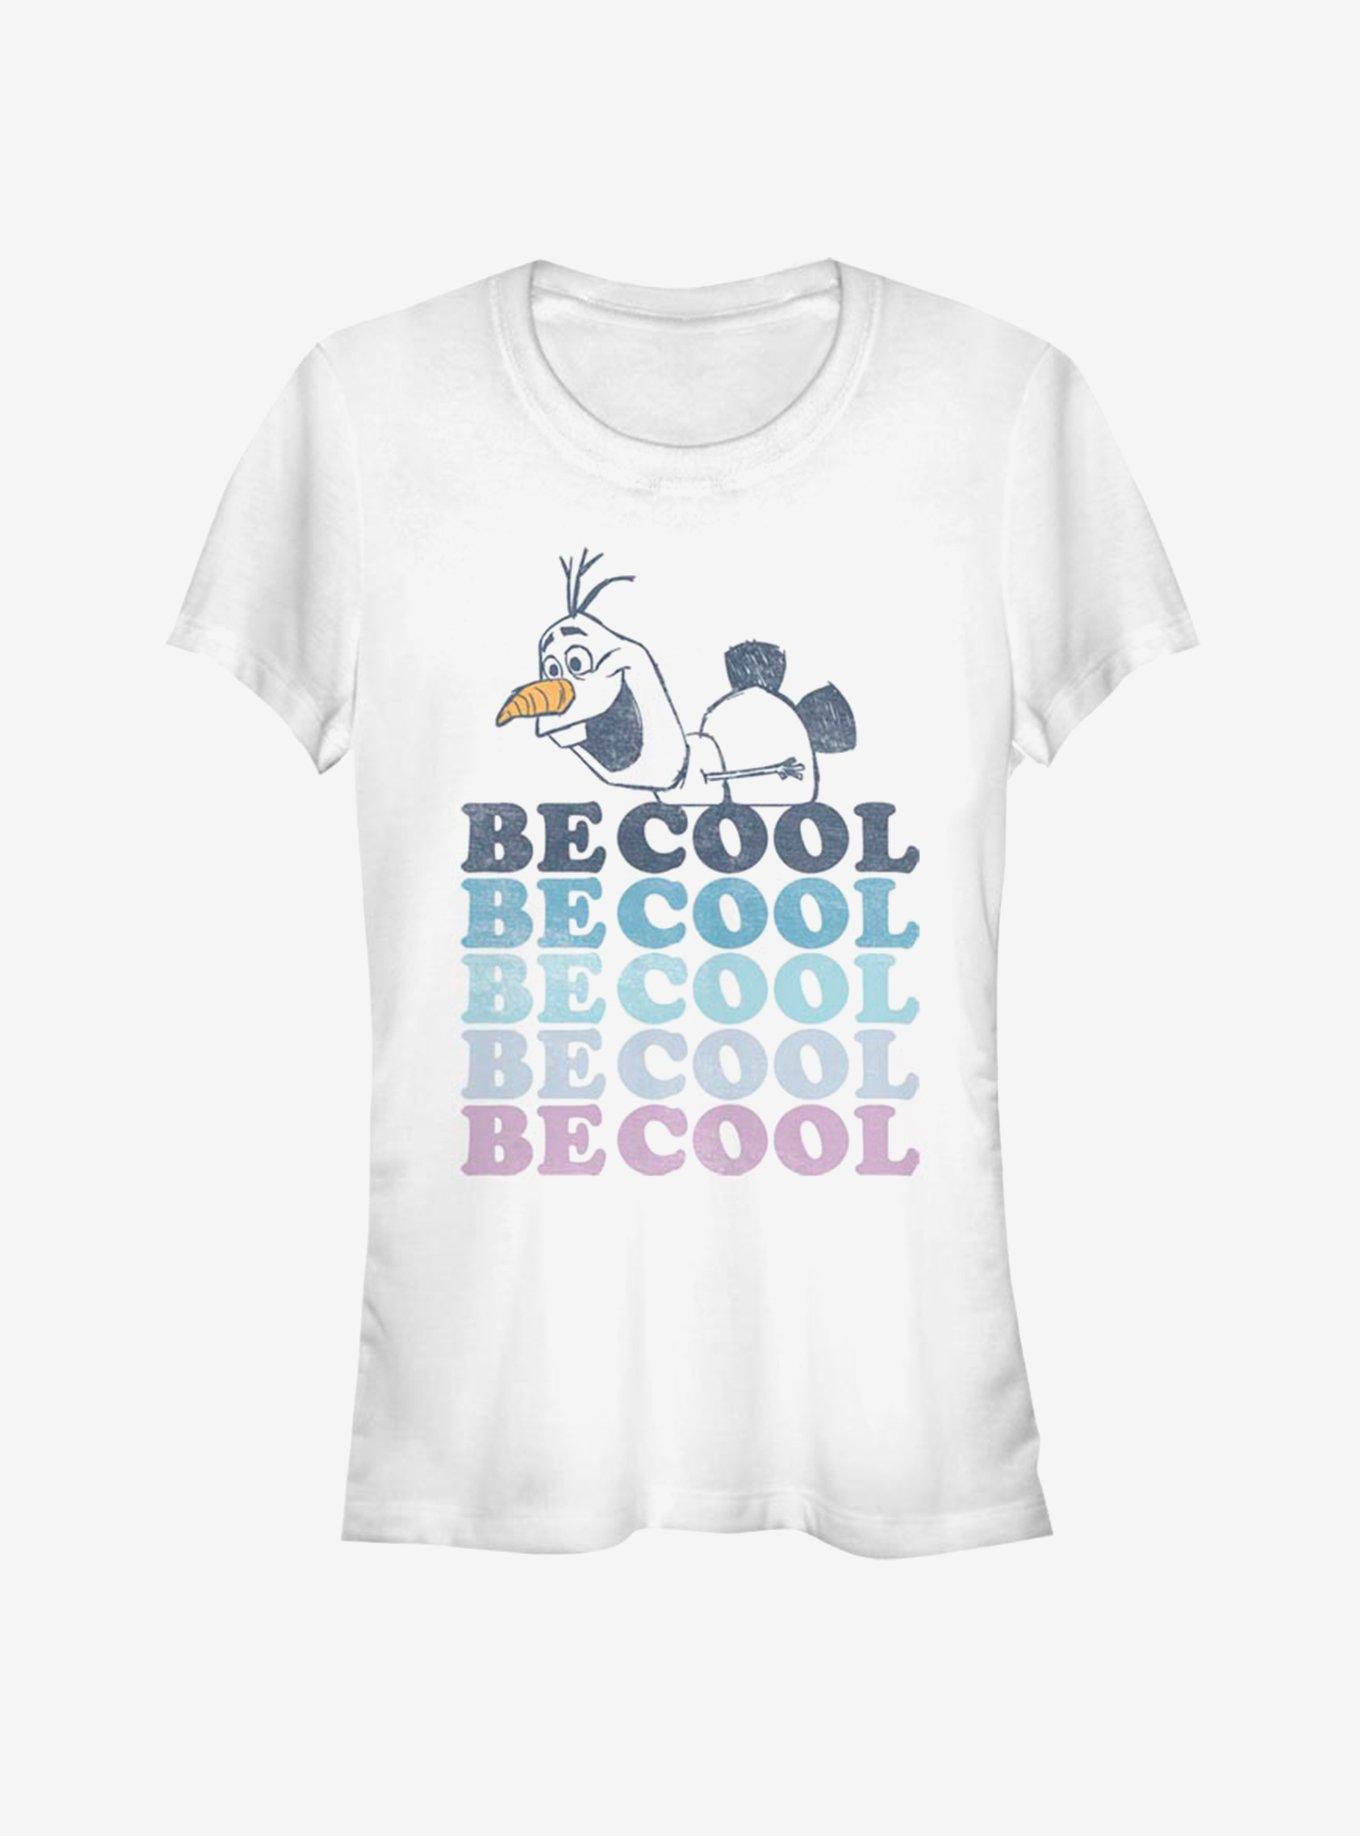 Disney Frozen 2 Olaf Be Cool Girls T-Shirt